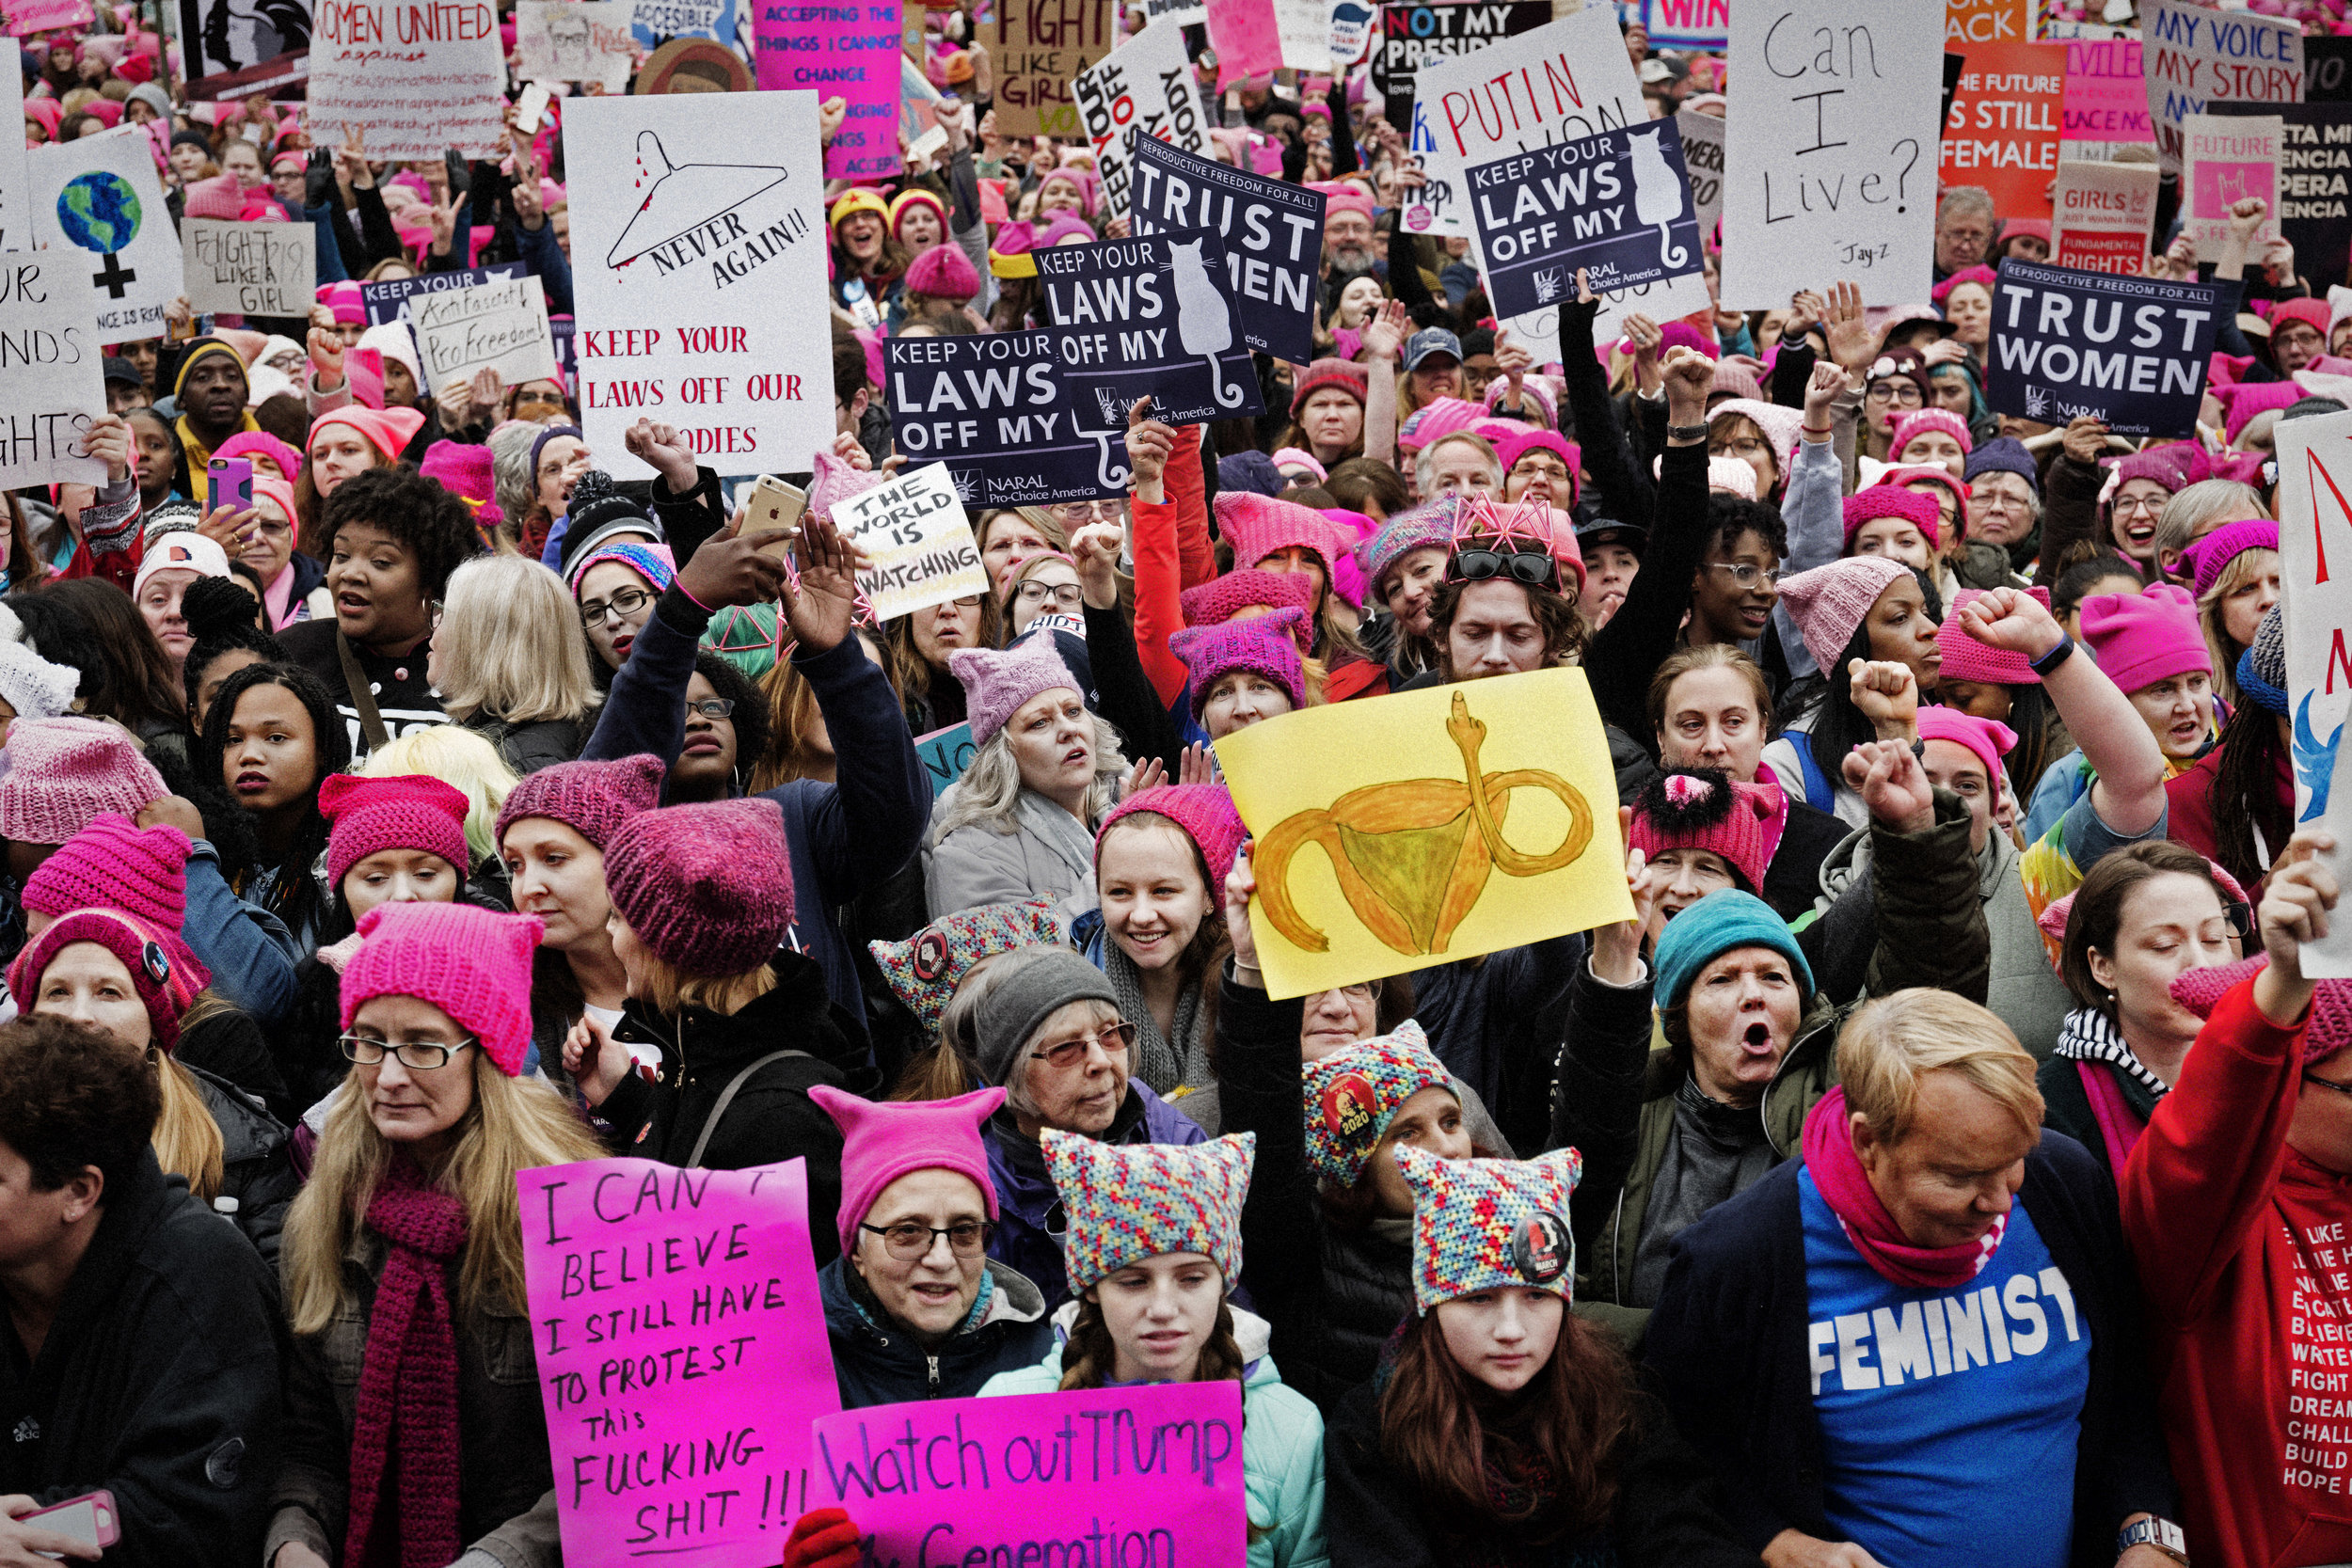  Gloria Steinem on stage at the Women’s March on Washington, Jan. 21, 2017.&nbsp;Photo Credit: Cass Bird 